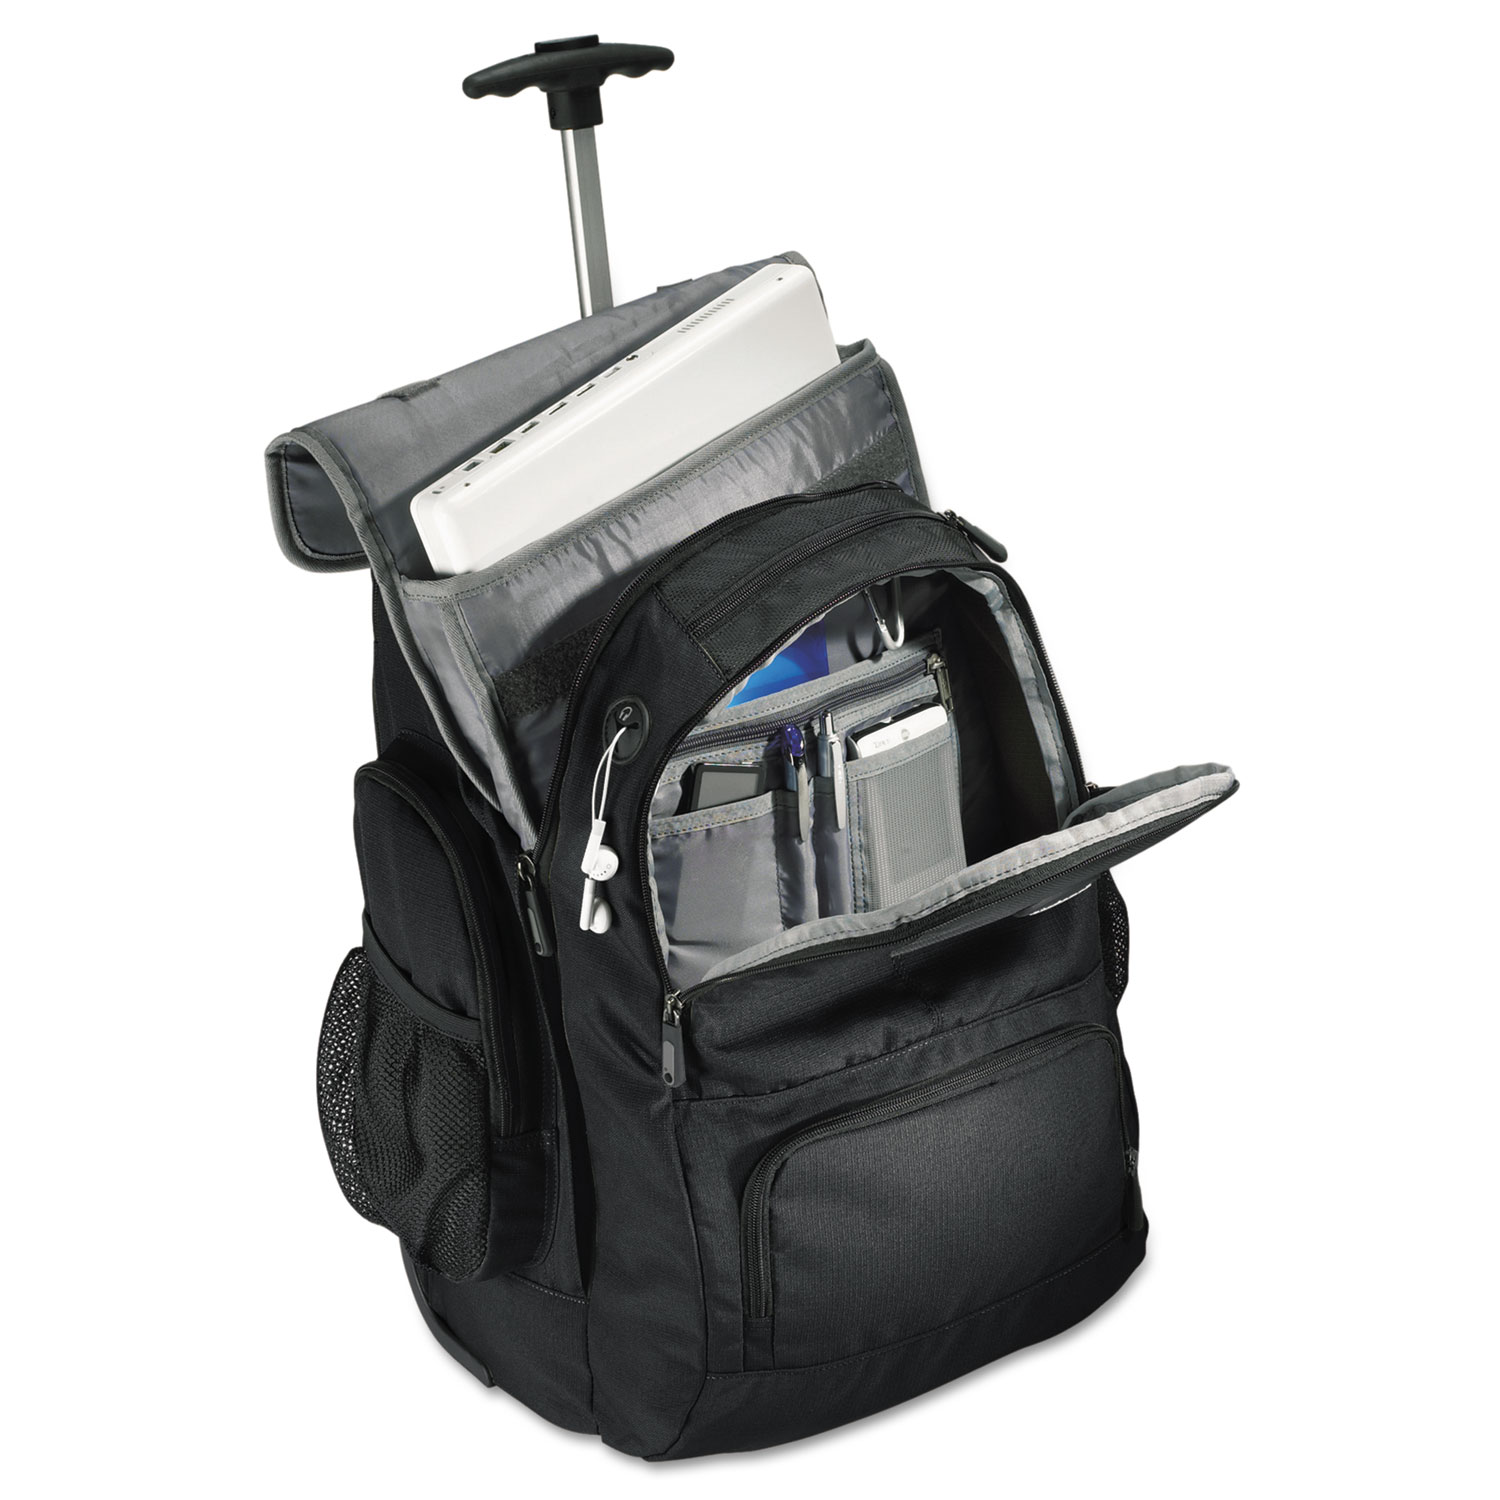  Samsonite 17896-1053 Rolling Backpack, 14 x 8 x 21, Black/Charcoal (SML178961053) 